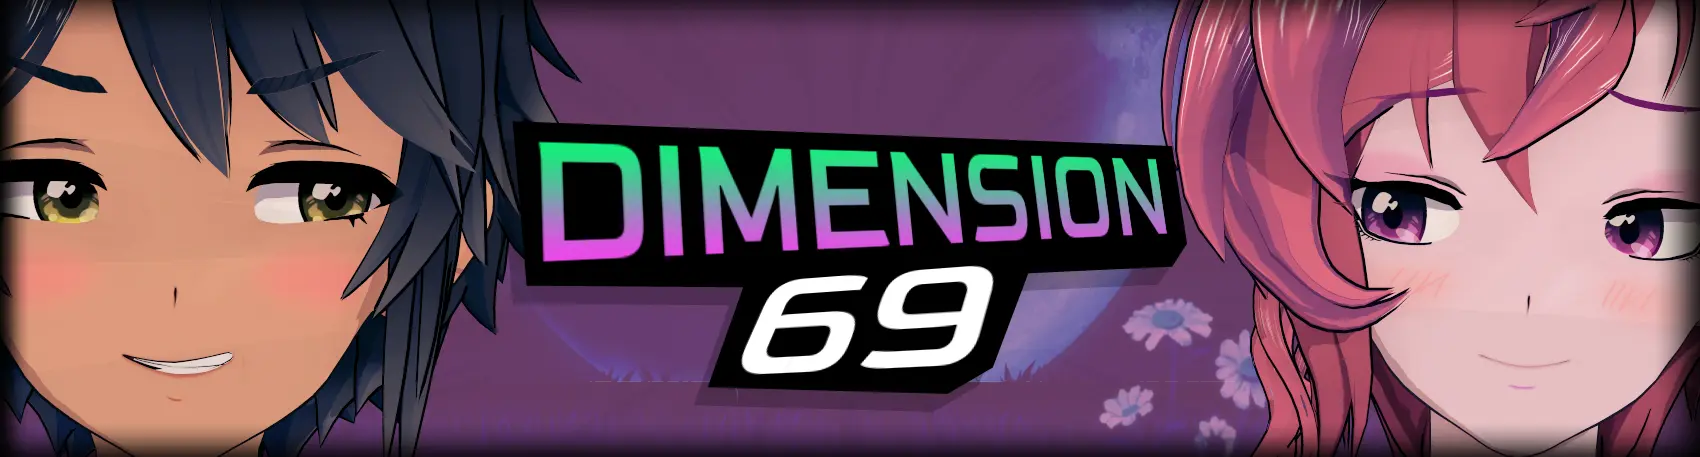 Dimension 69 main image